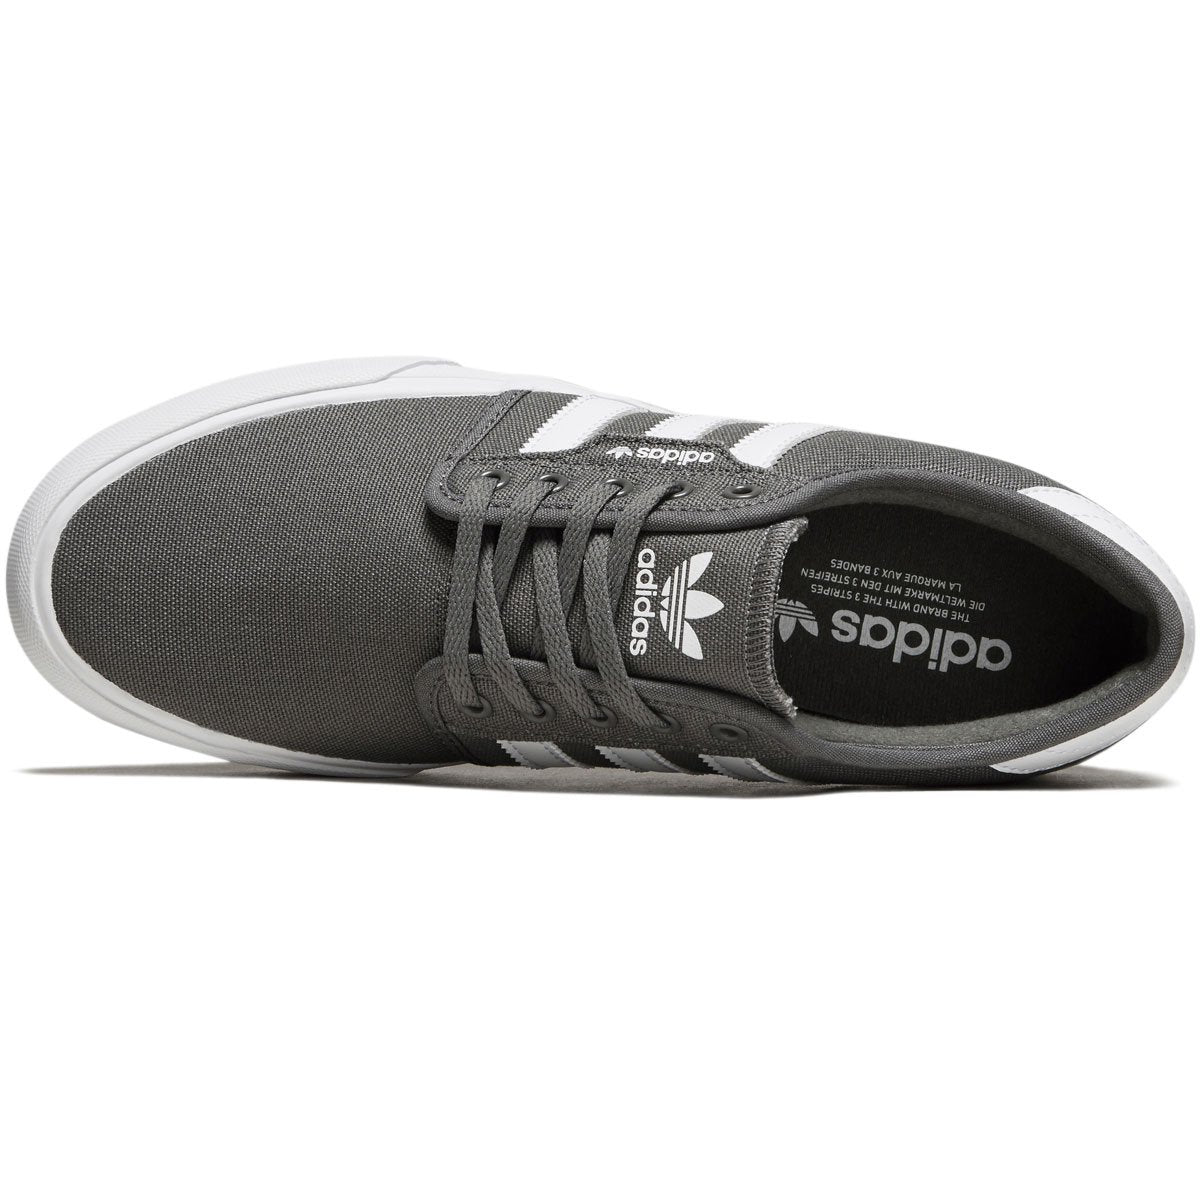 Adidas Seeley Xt Shoes - Grey/White/White image 3